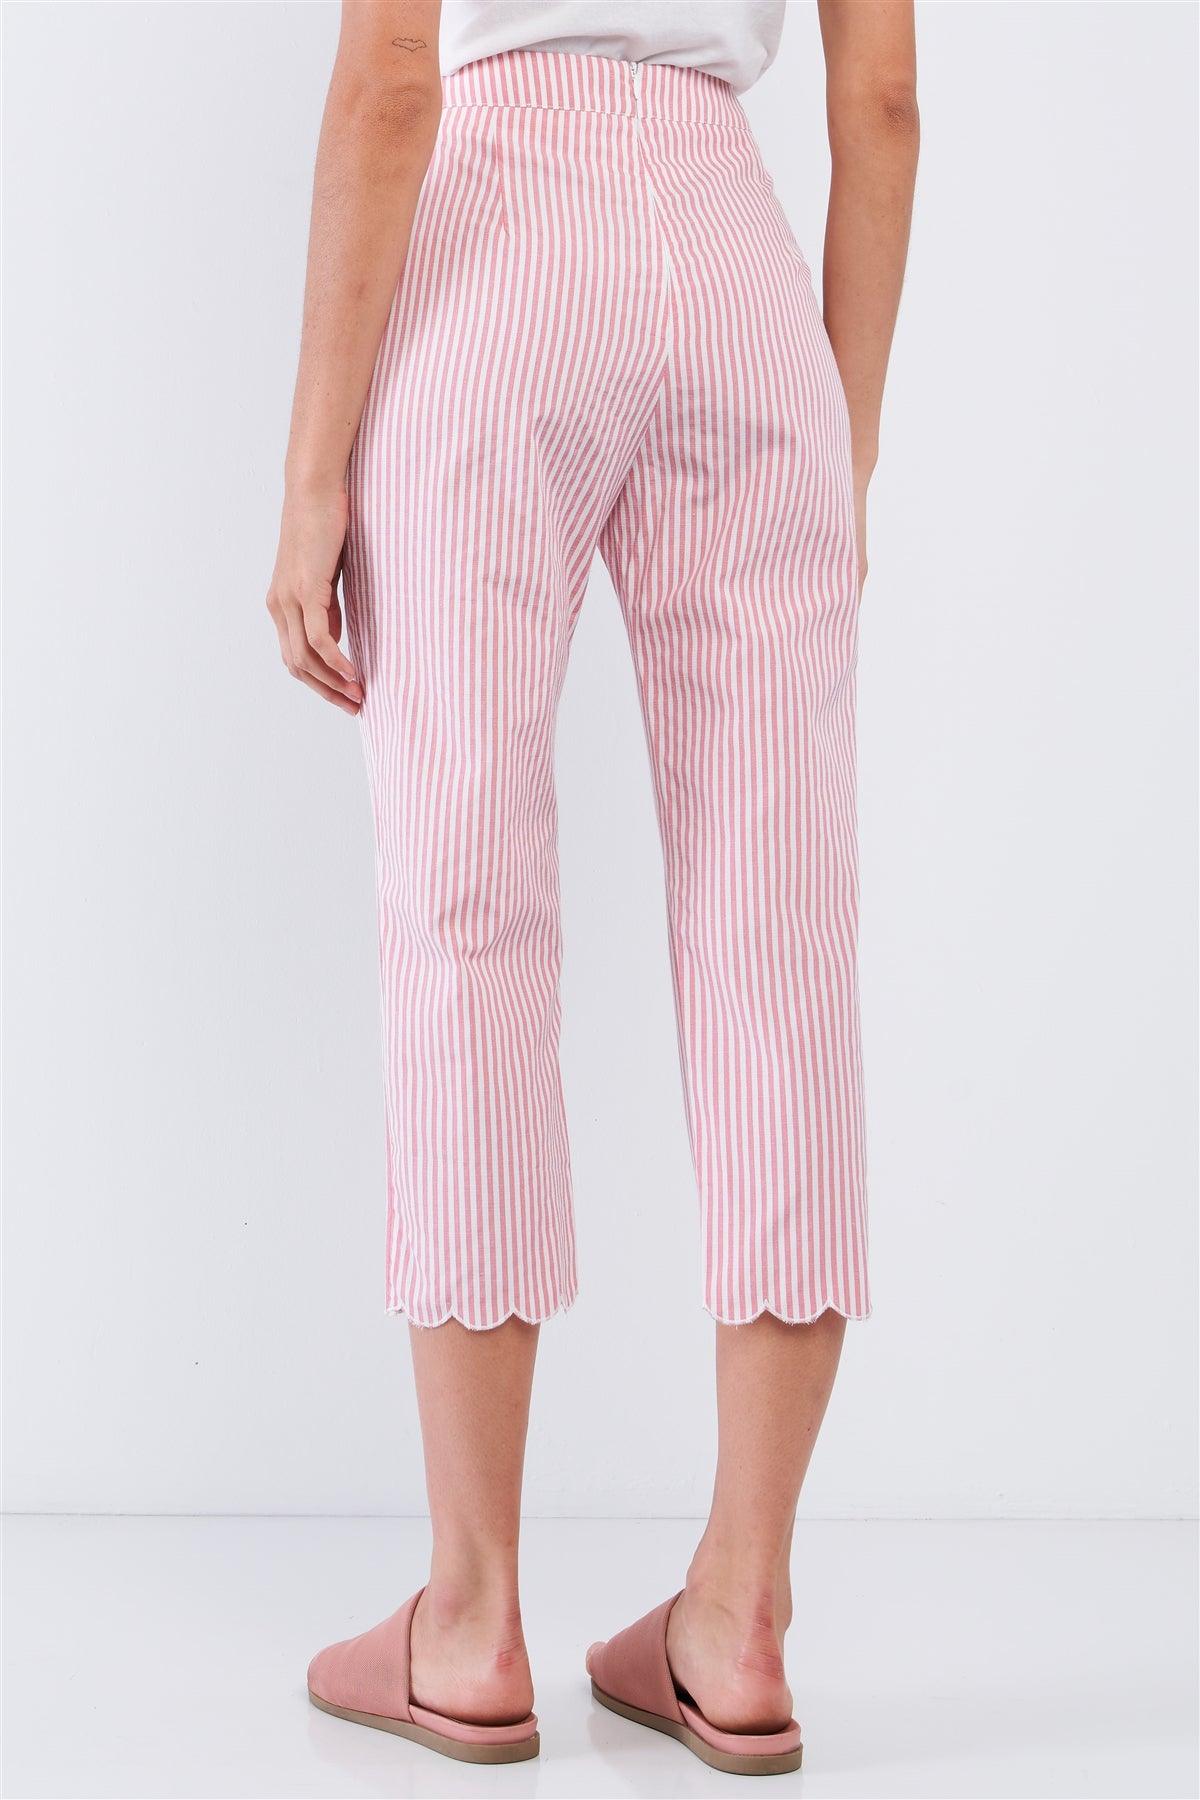 Red & White Striped High Waist Scalloped Hem Summer Capri Pants /1-1-2-2